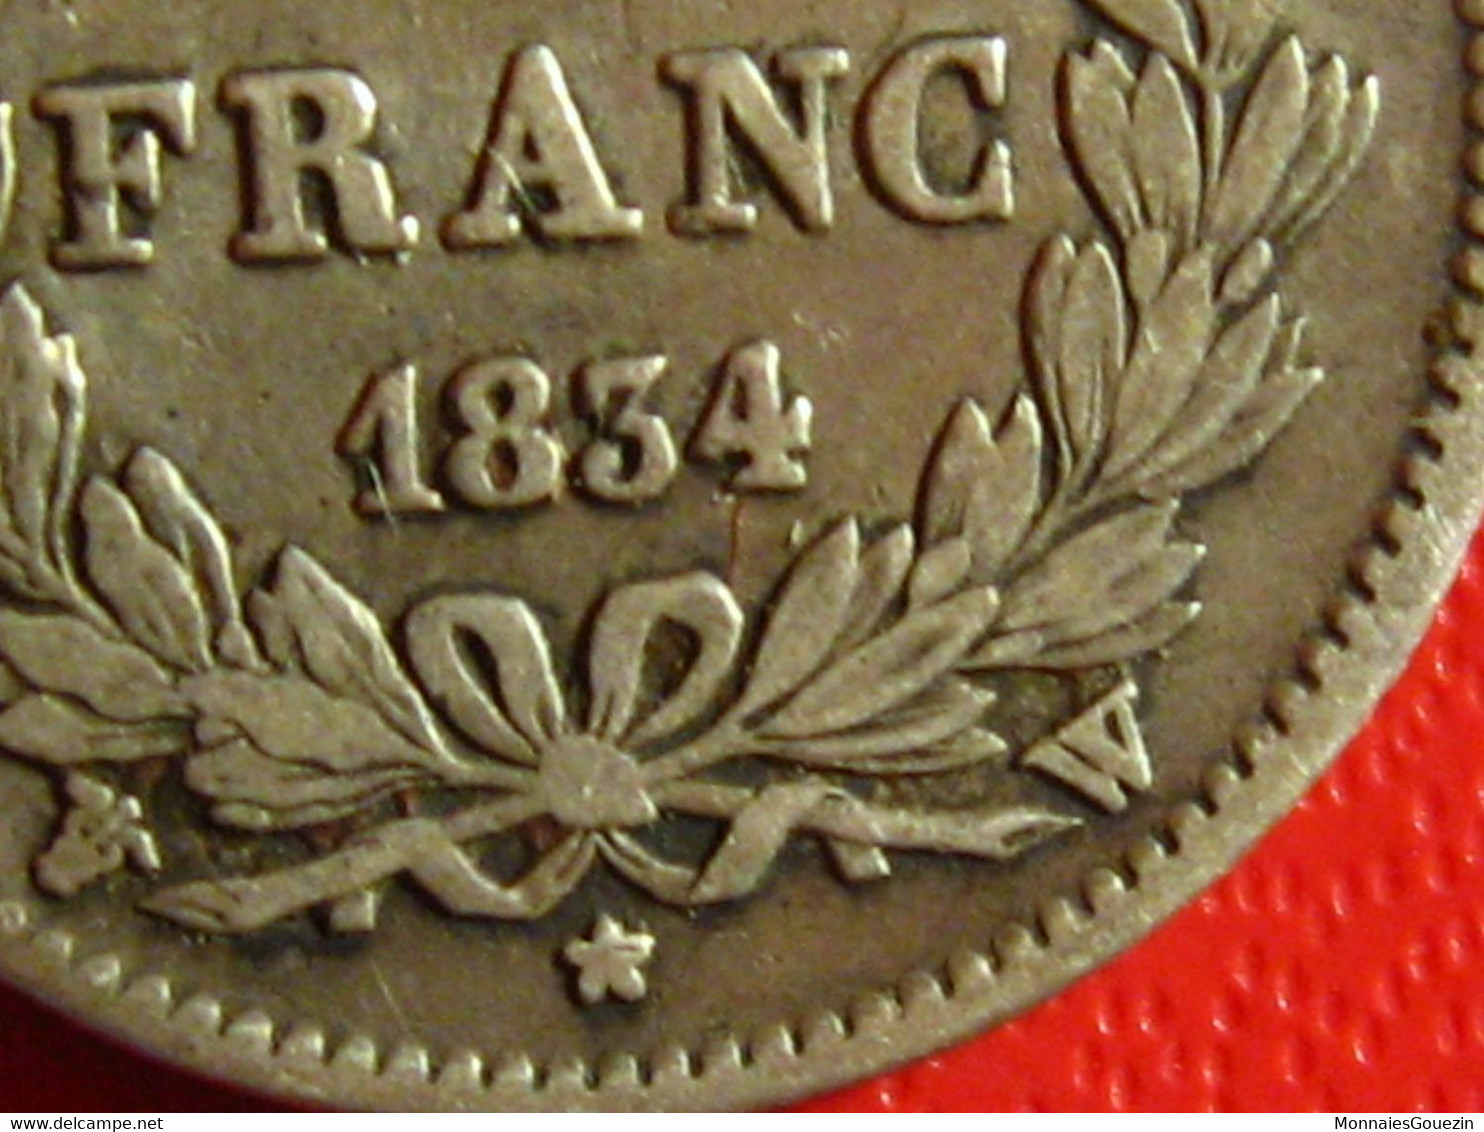 France - 1/2 Franc 1834 W Lille Louis Philippe 5119 - 1/2 Franc